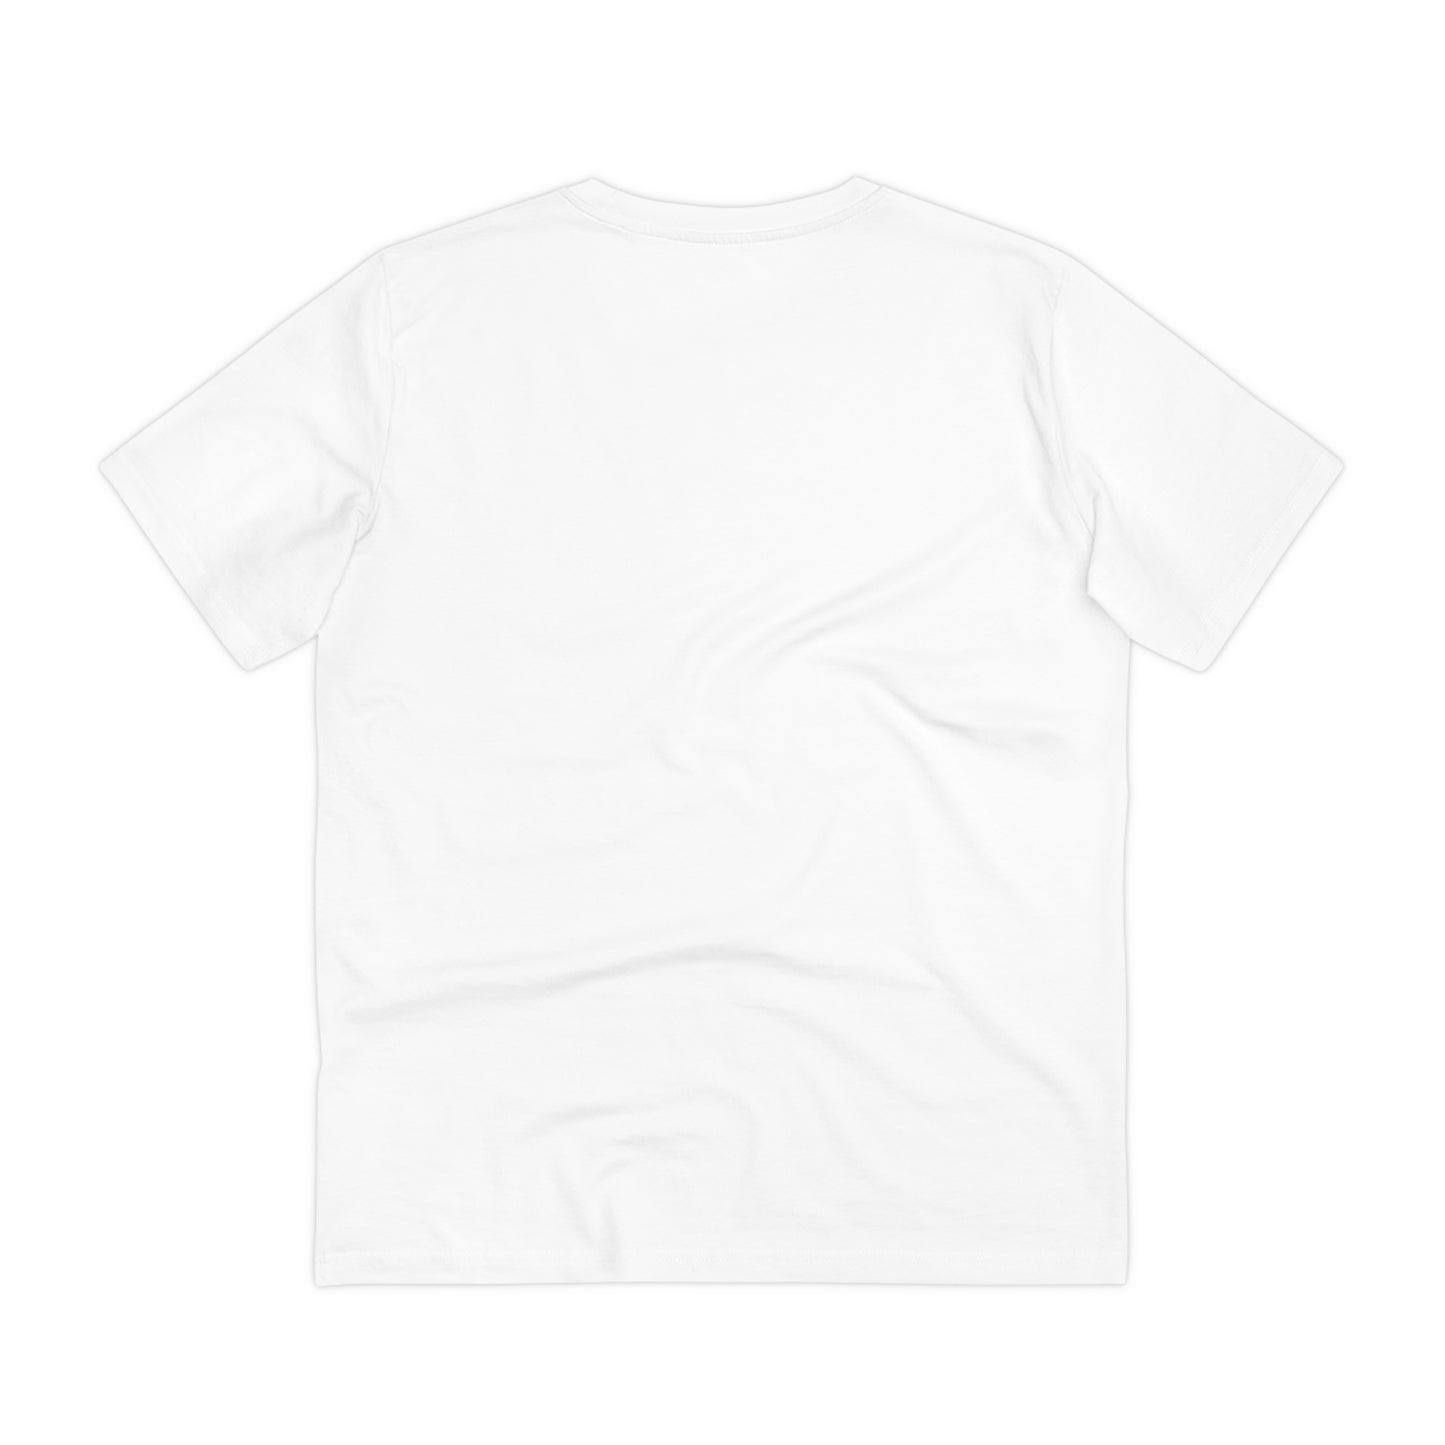 Justabarth T-shirt #3